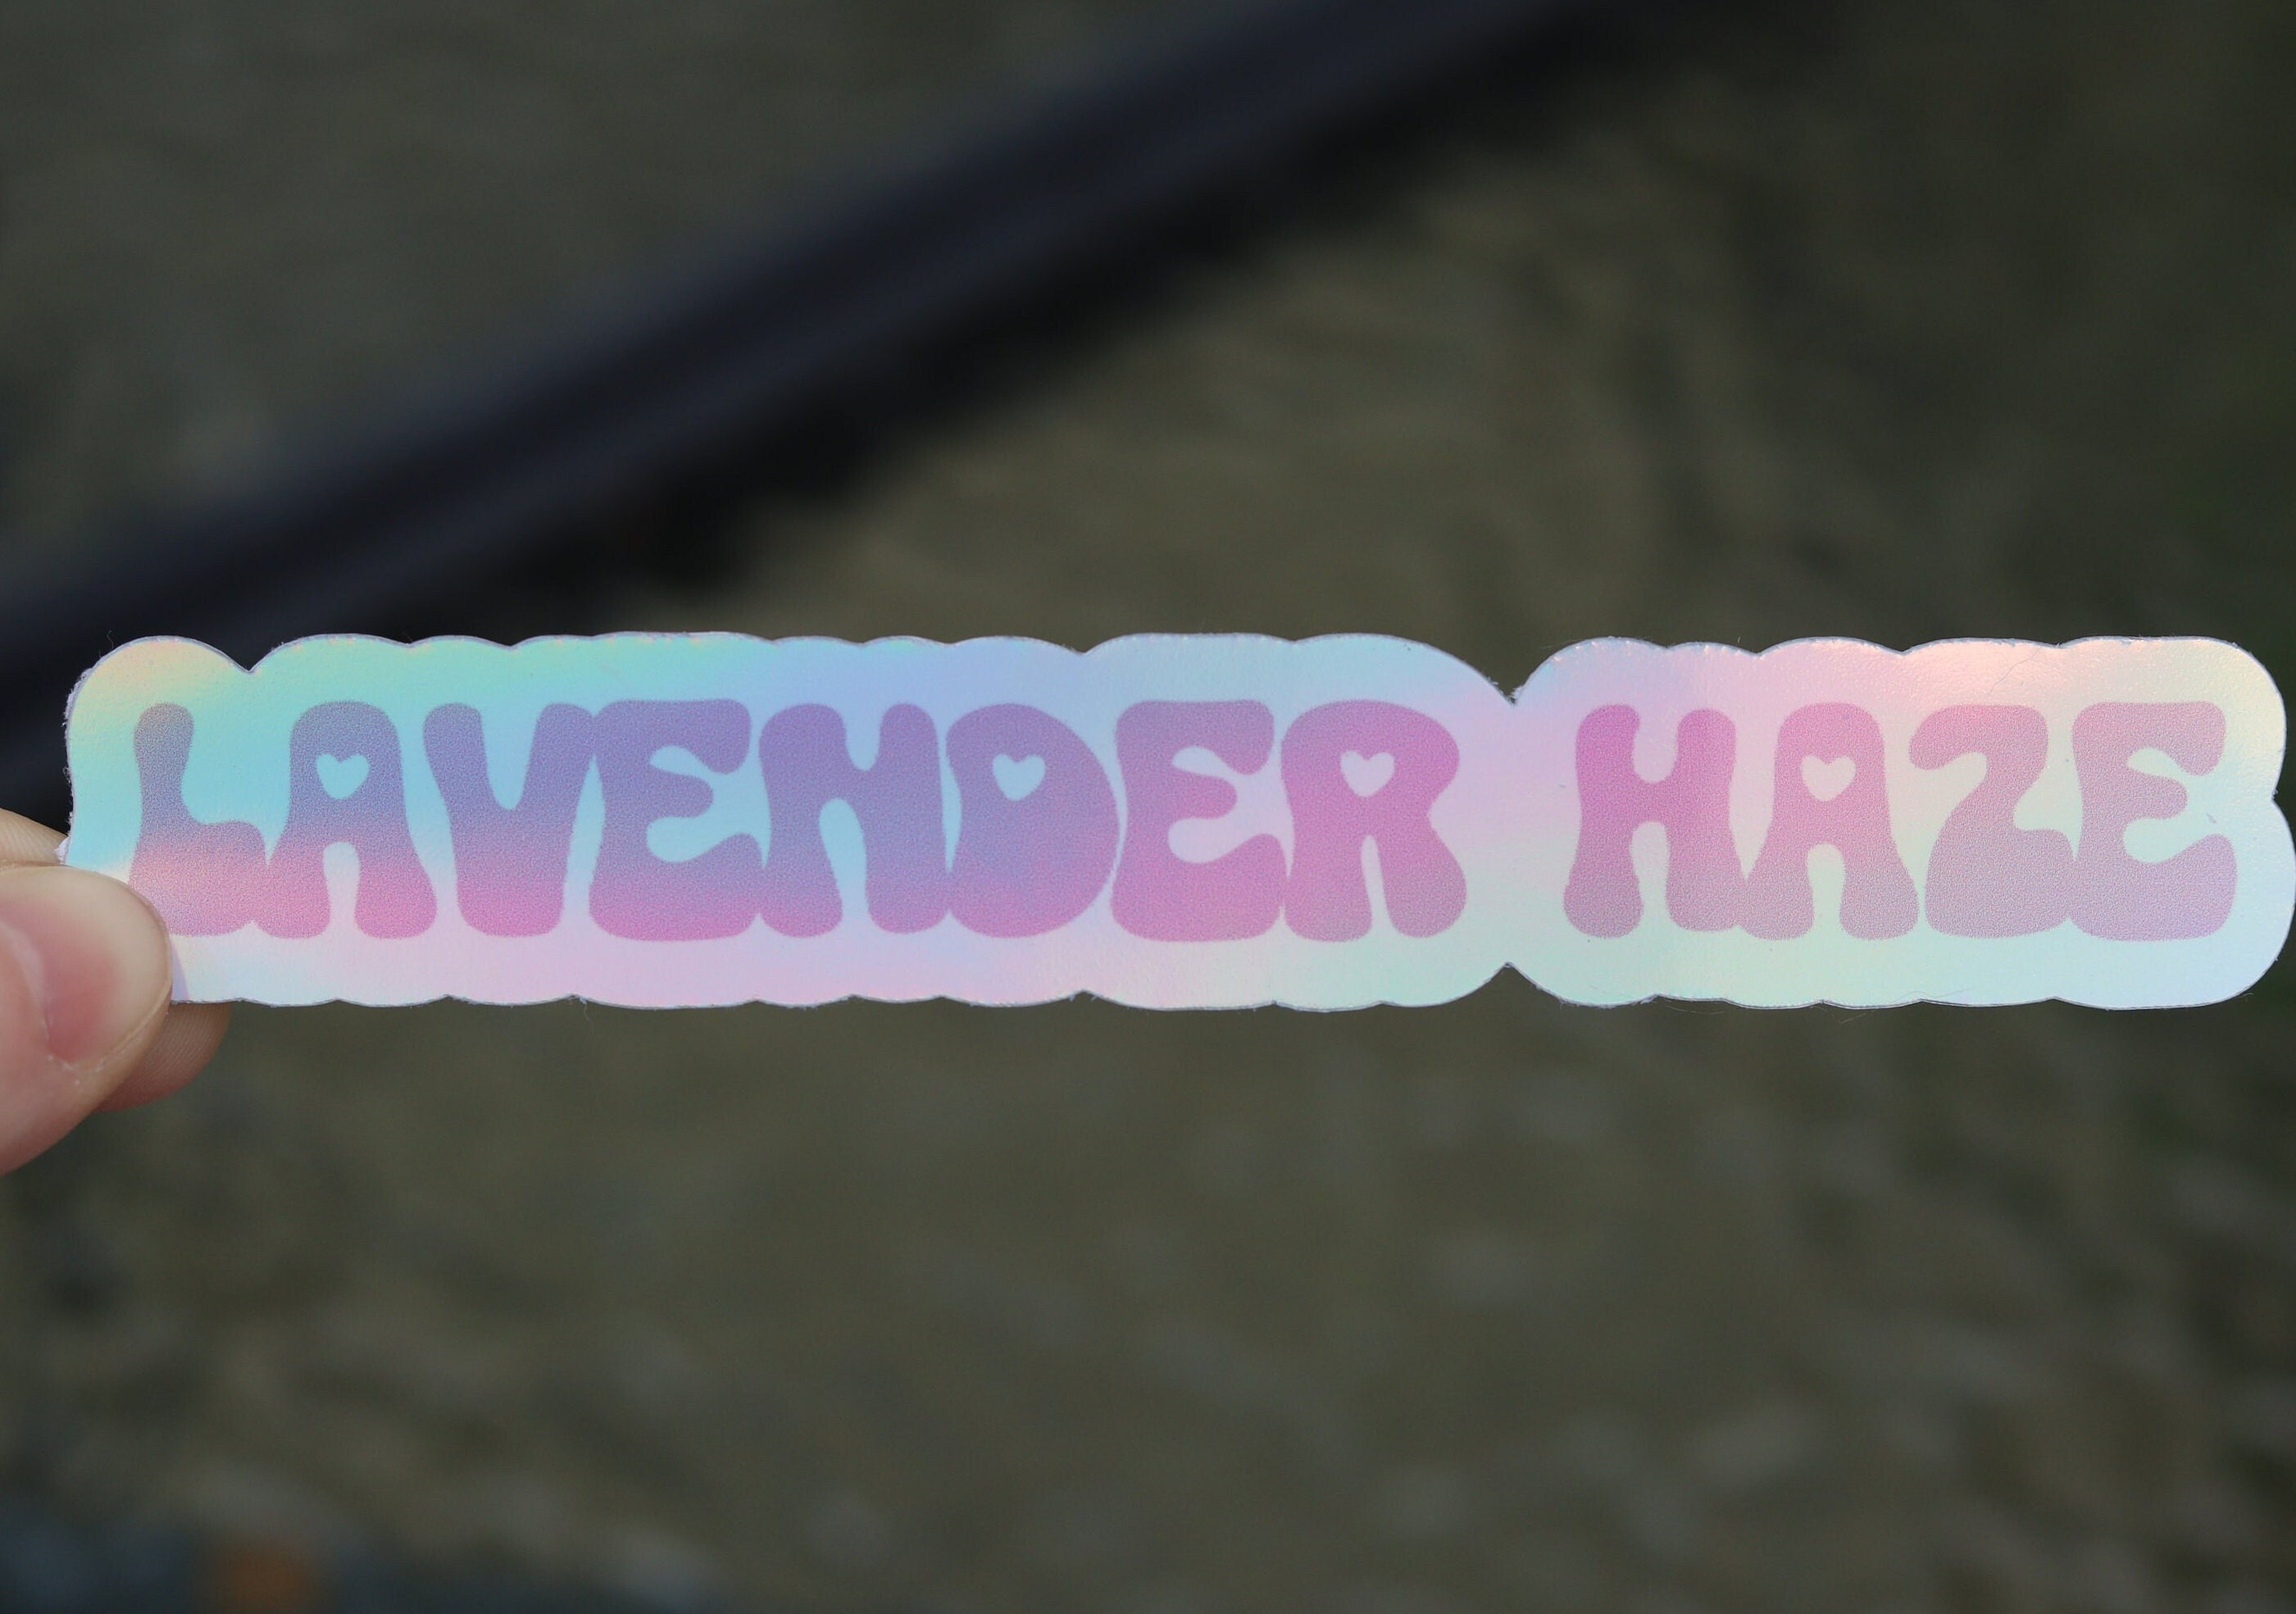 Lavender Haze Holographic Stickers  Taylor Swift Vinyl Stickers –  handsomeprintsdesign